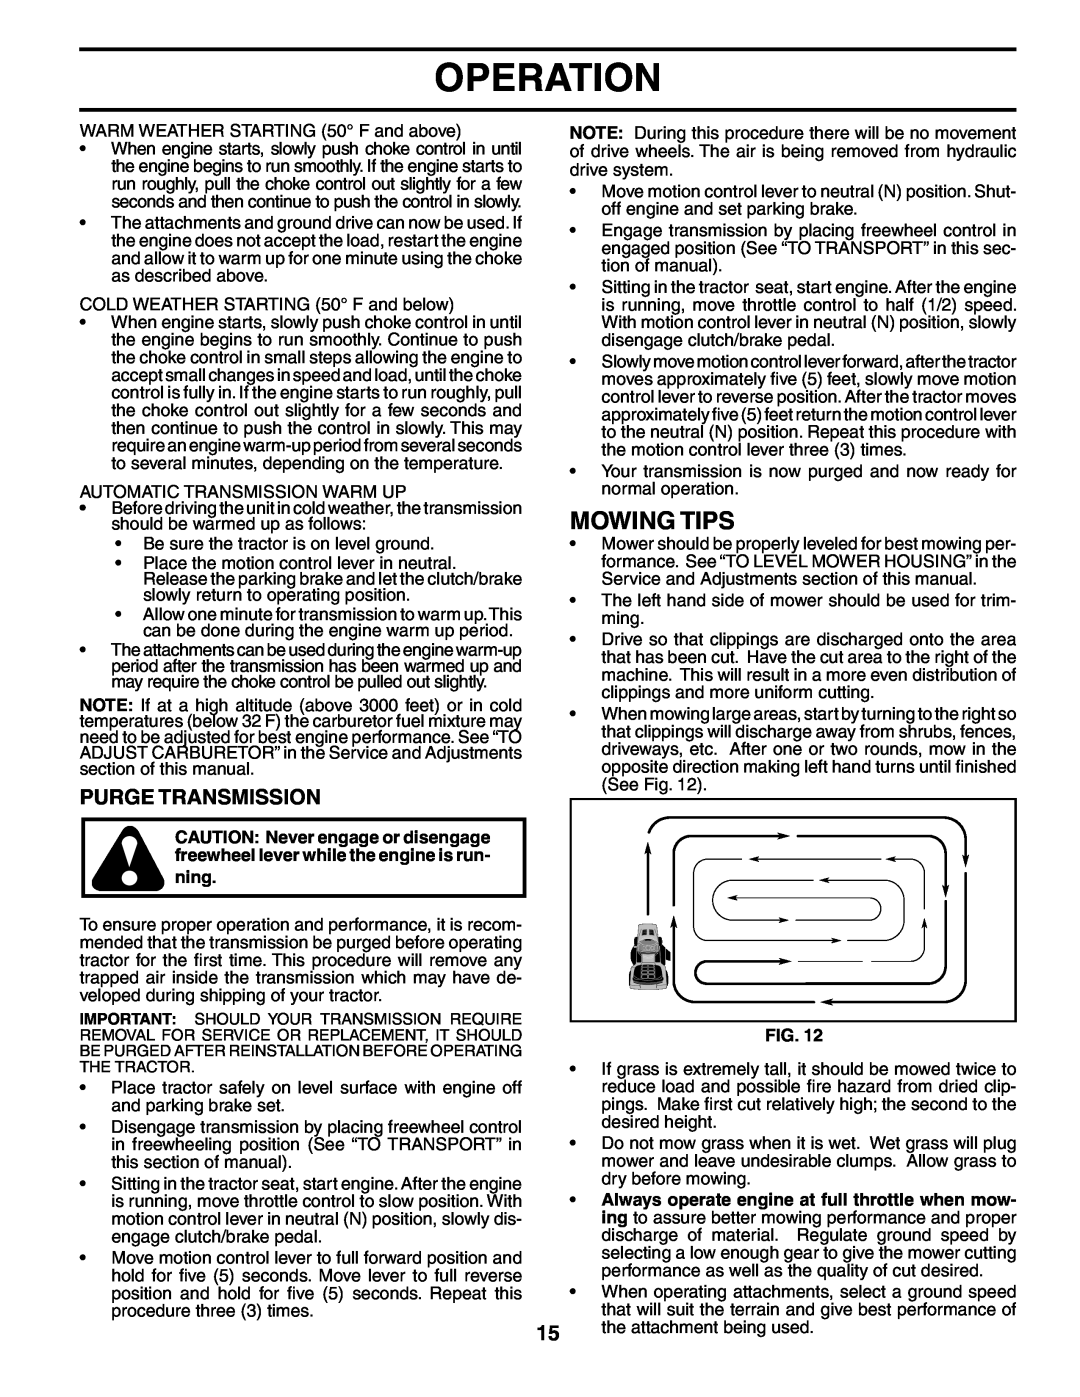 Poulan DB27H48YT manual Mowing Tips, Purge Transmission, Operation, ning, Fig 